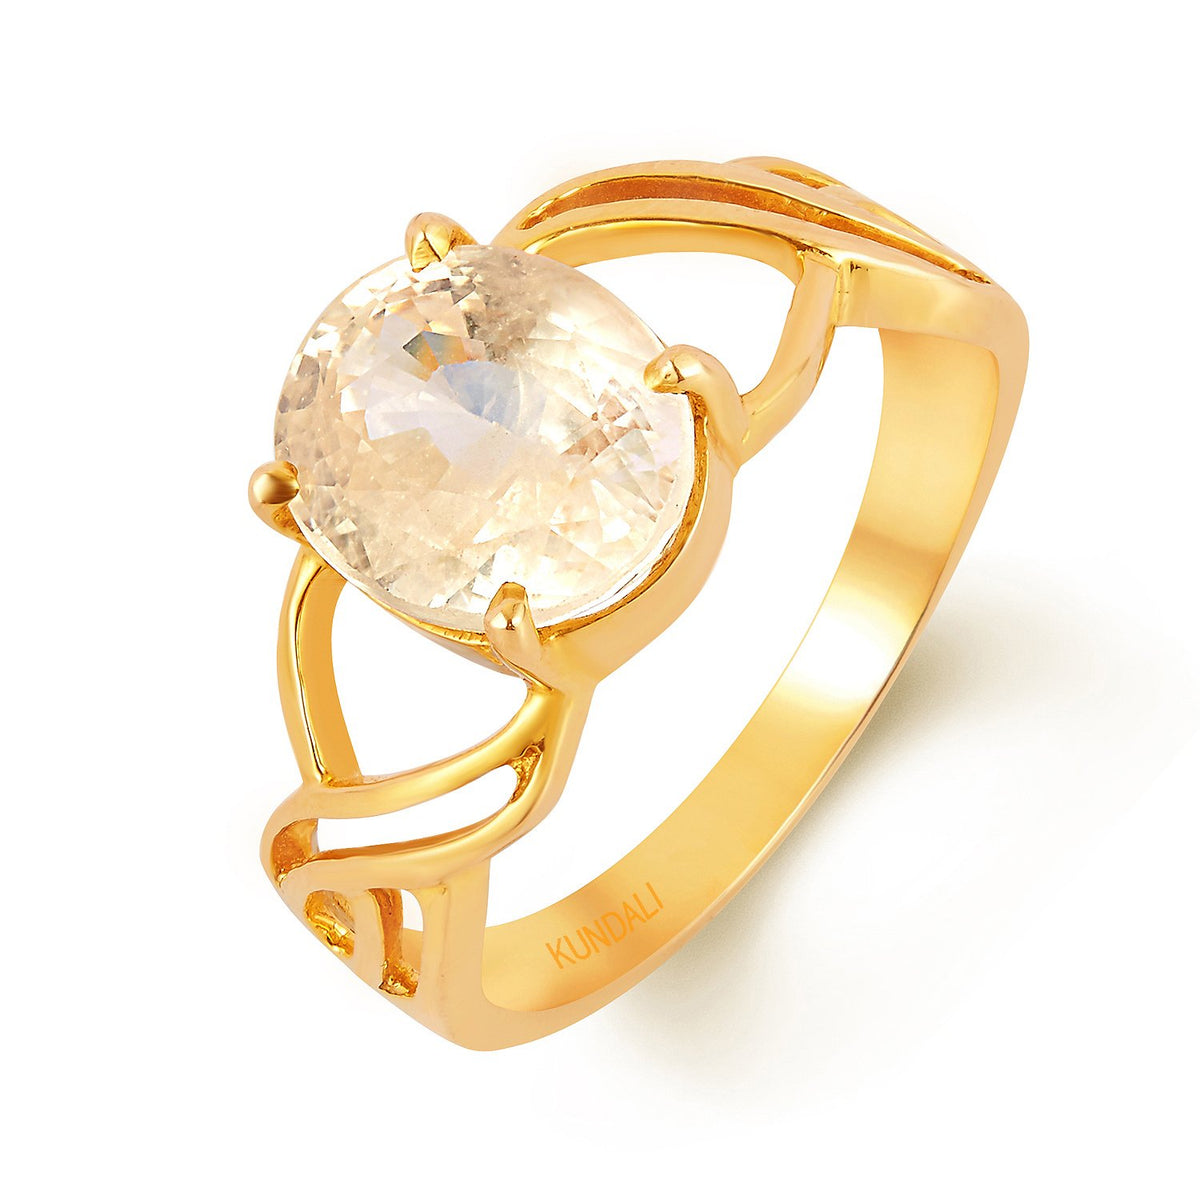 Glory Yellow sapphire (Pukhraj) gold ring – Kundaligems.com